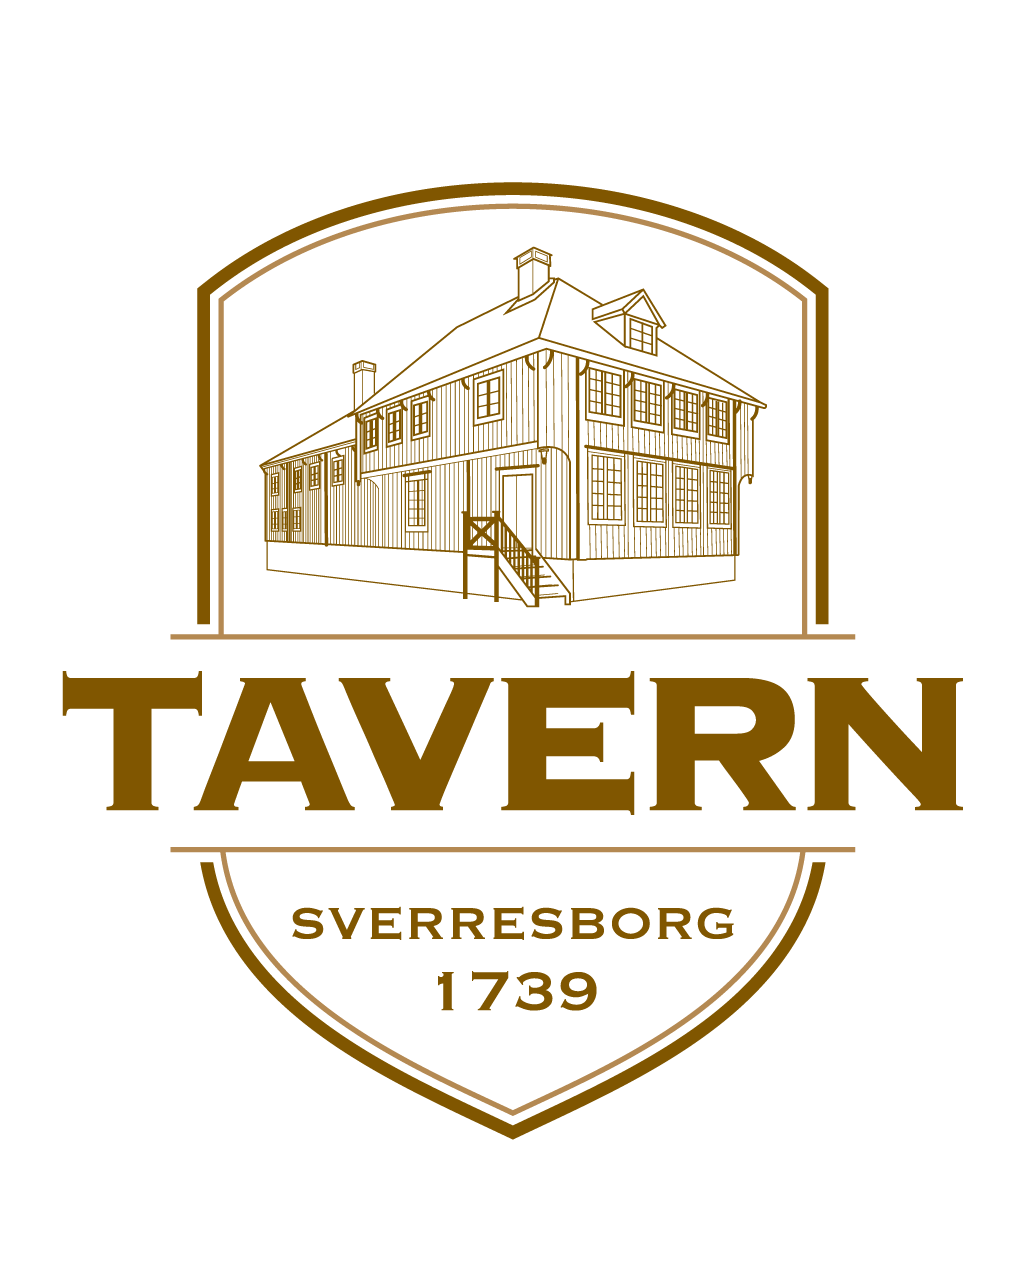 Tavern Sverresborg